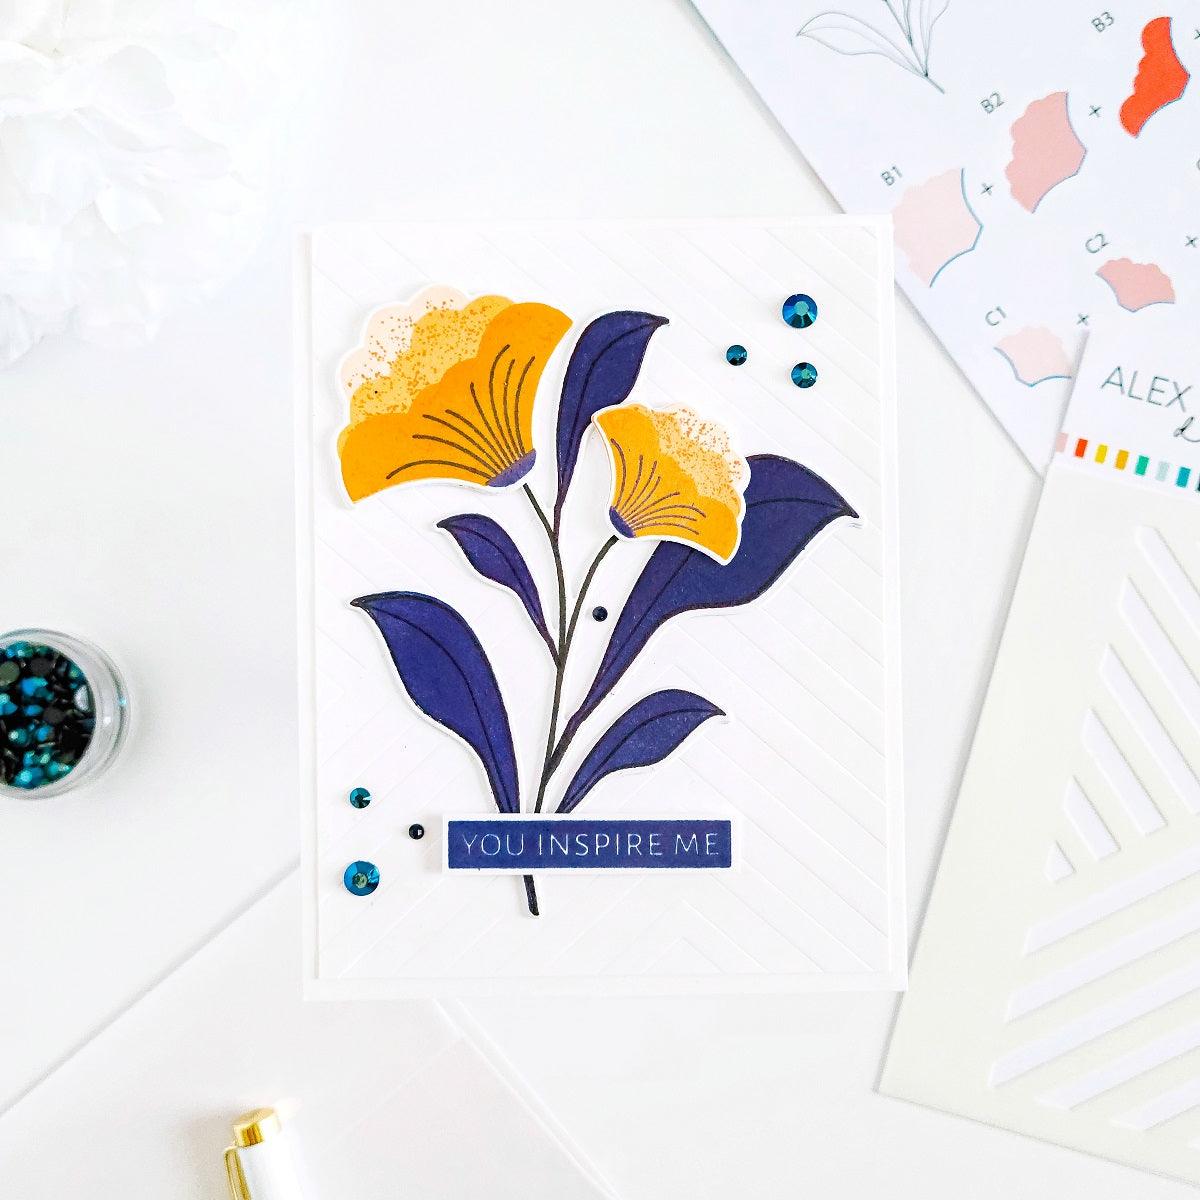 alex-syberia-designs-flowers-stencils-cardmaking-layering-stamps